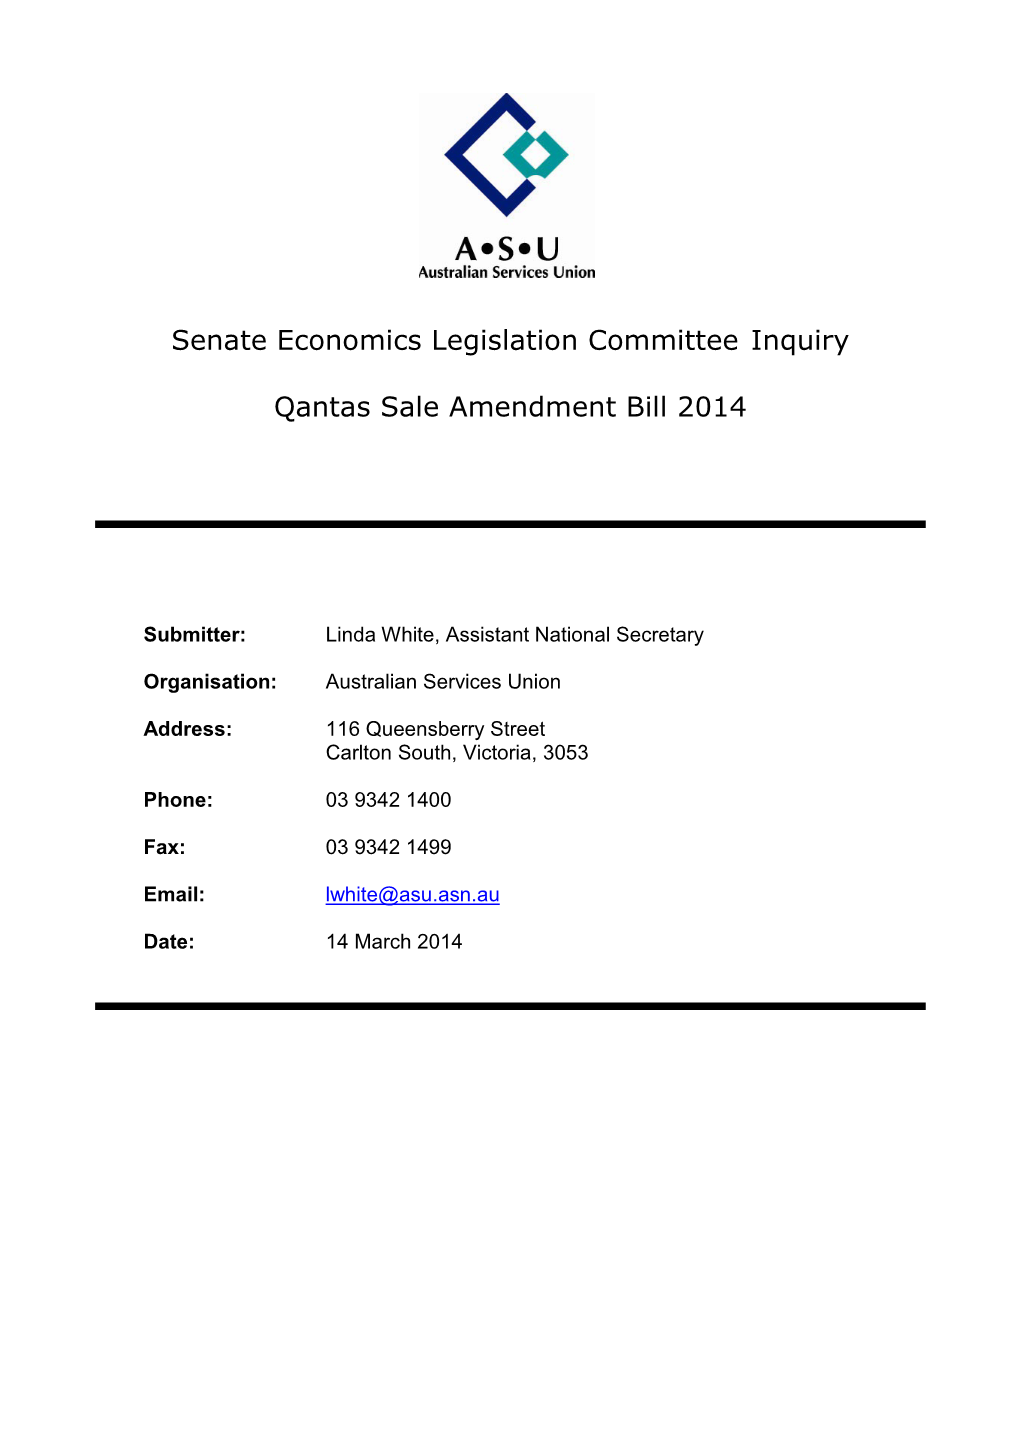 Qantas Sale Amendment Bill 2014